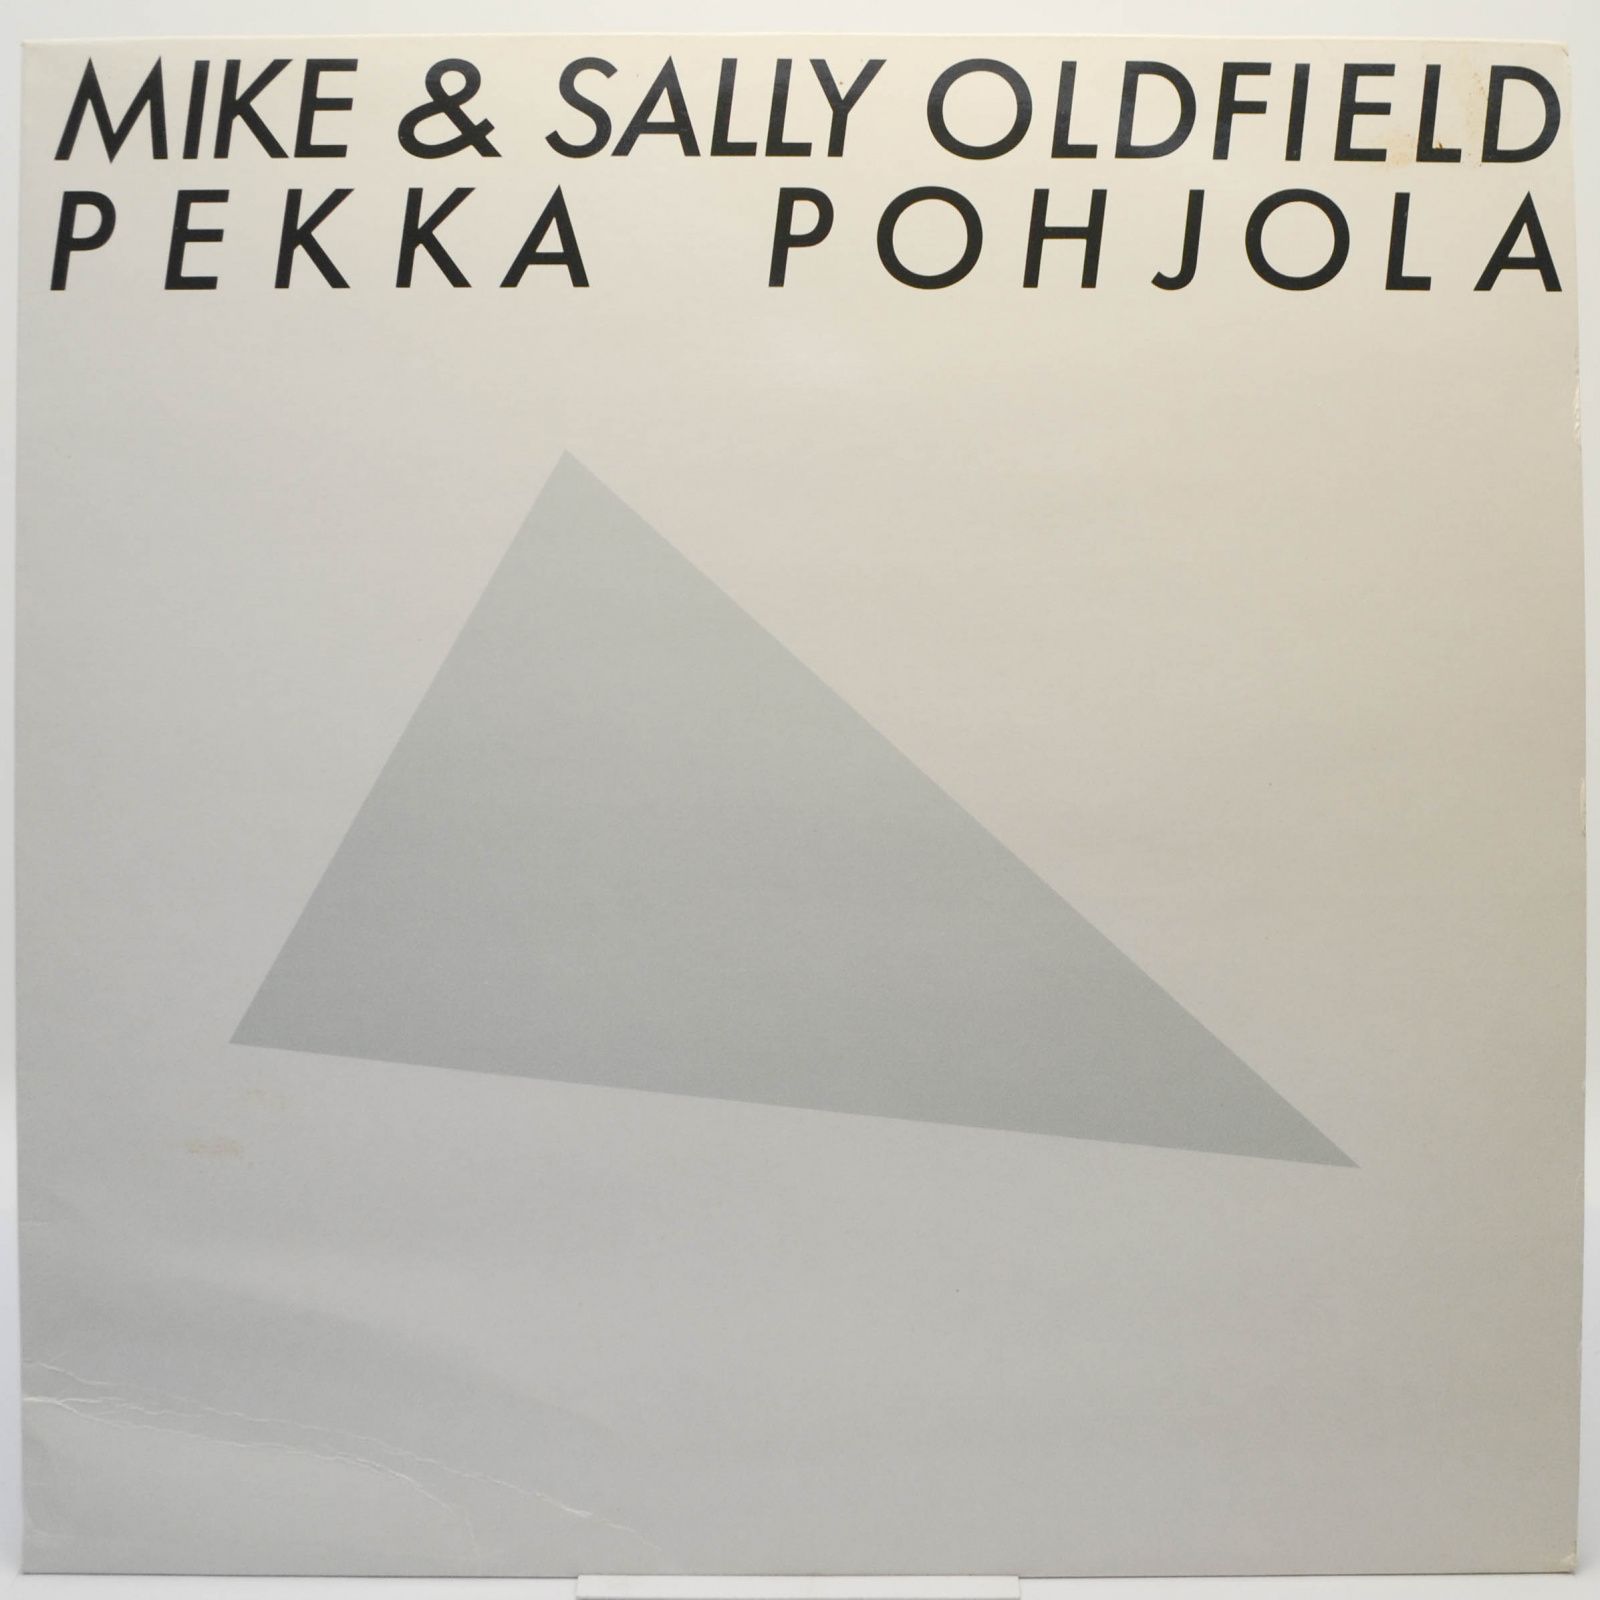 Mike & Sally Oldfield, Pekka Pohjola, 1981